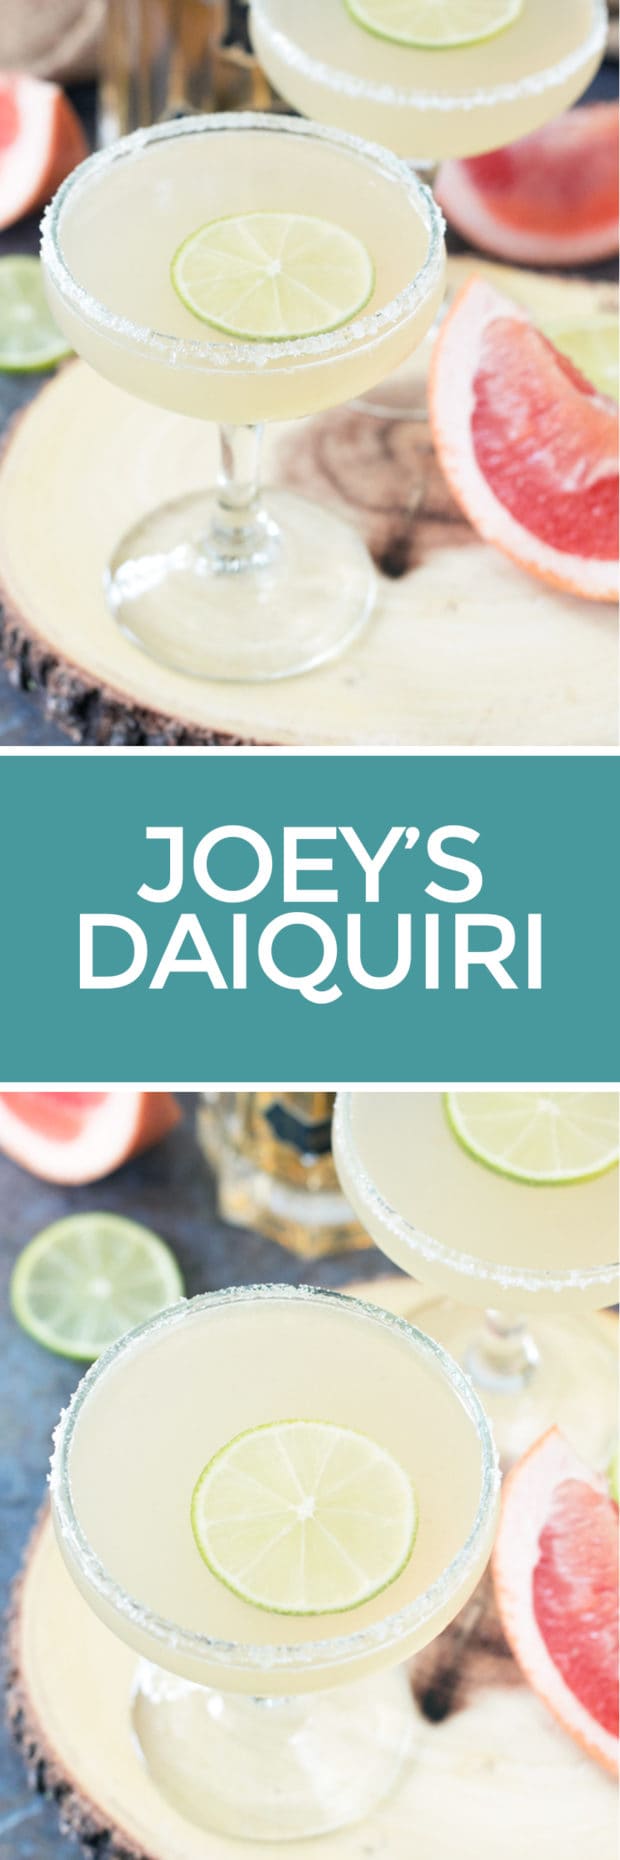 Joey's Daiquiri | cakenknife.com